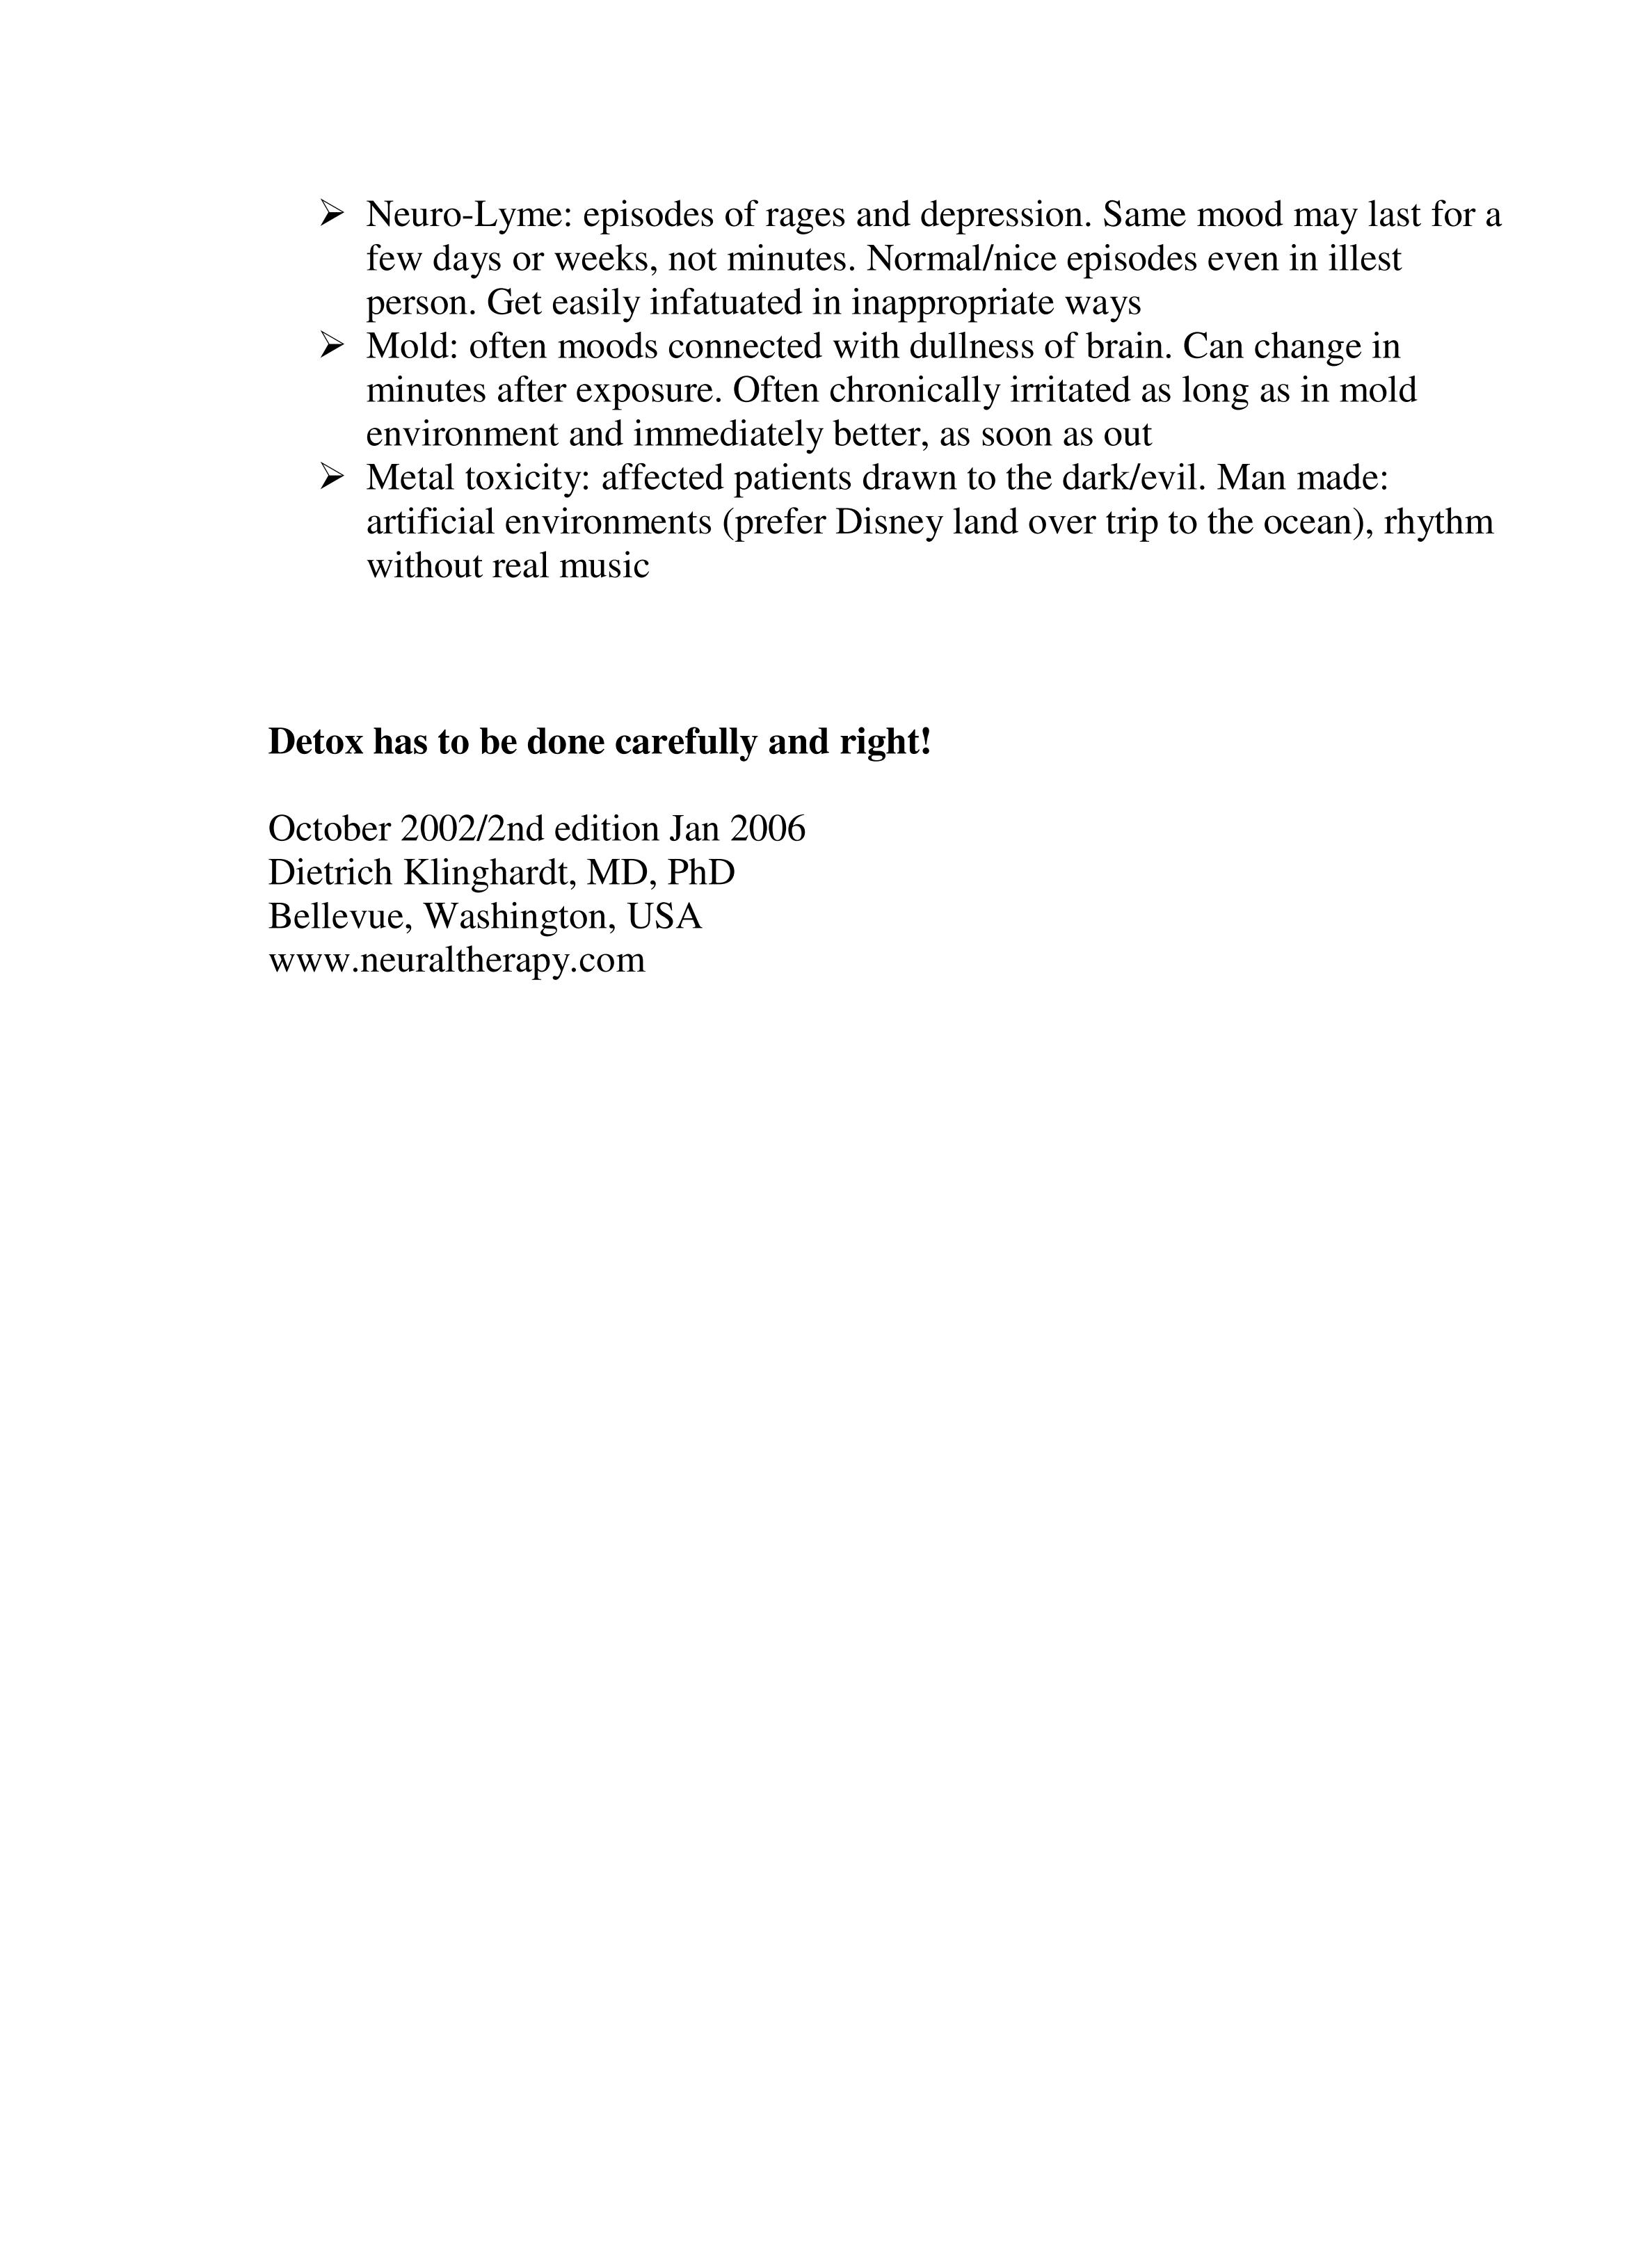 Klinghardt Neurotoxin Protocols page 19